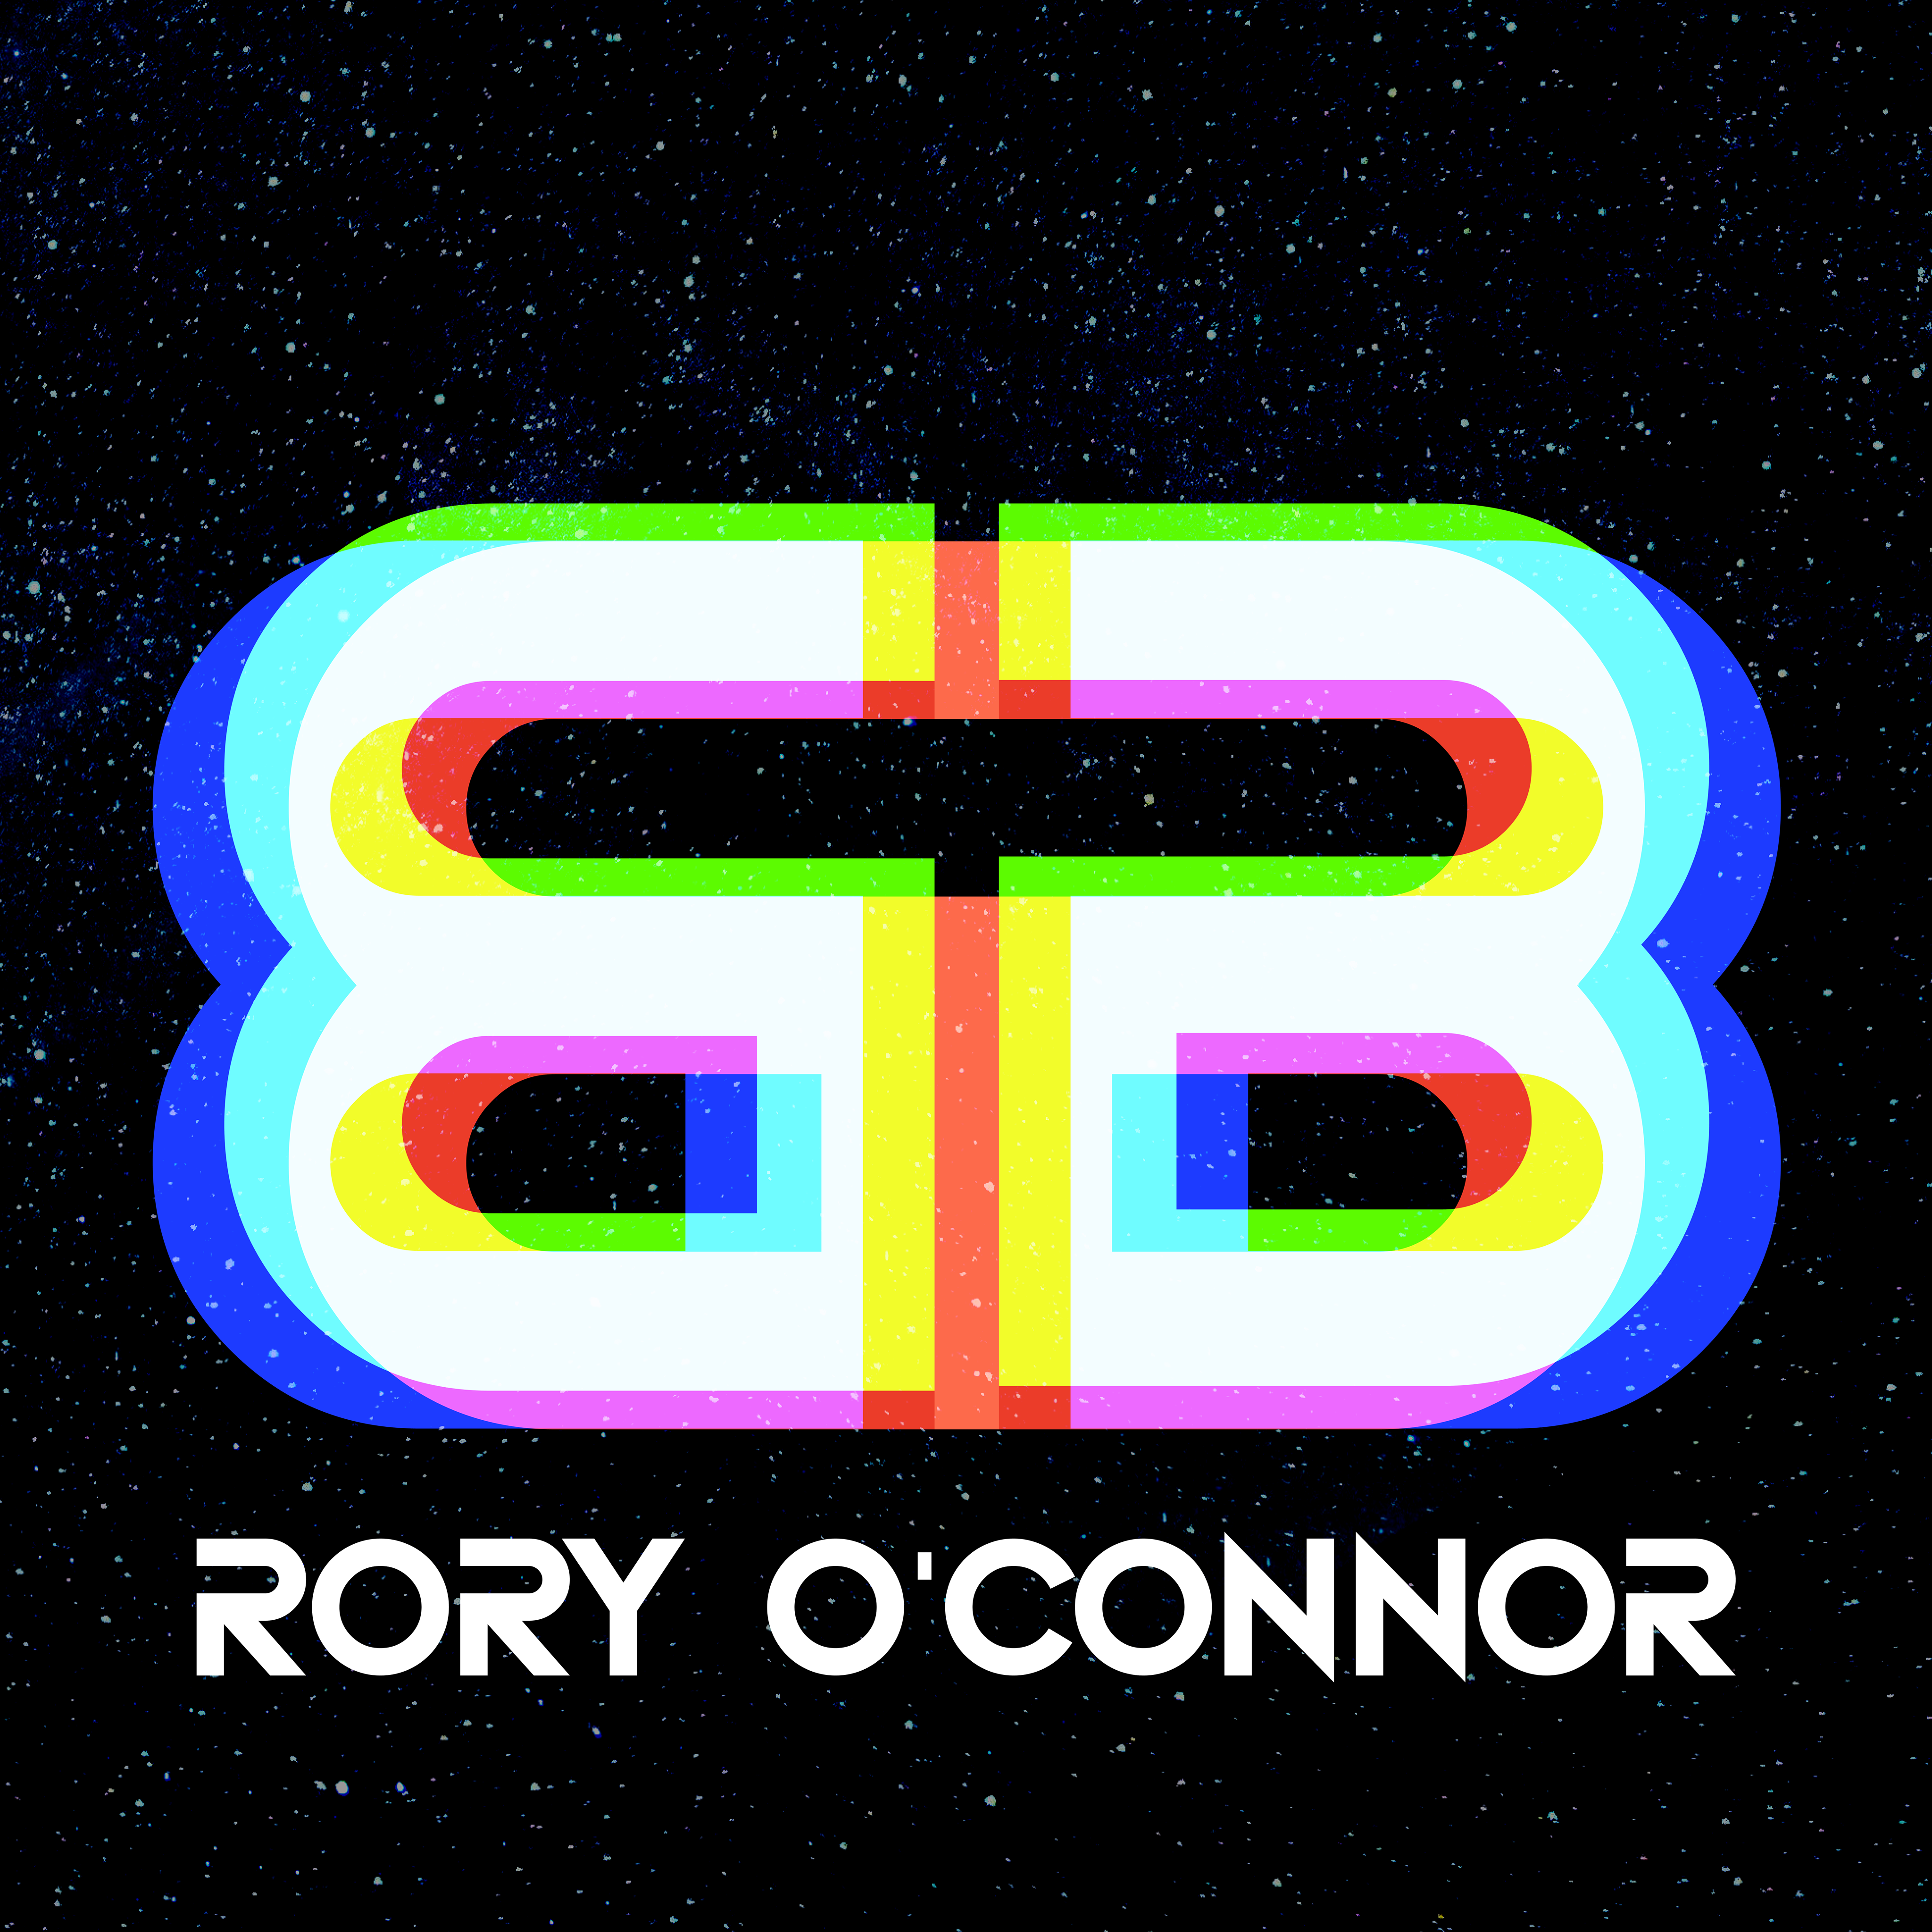 Rory O'Connor